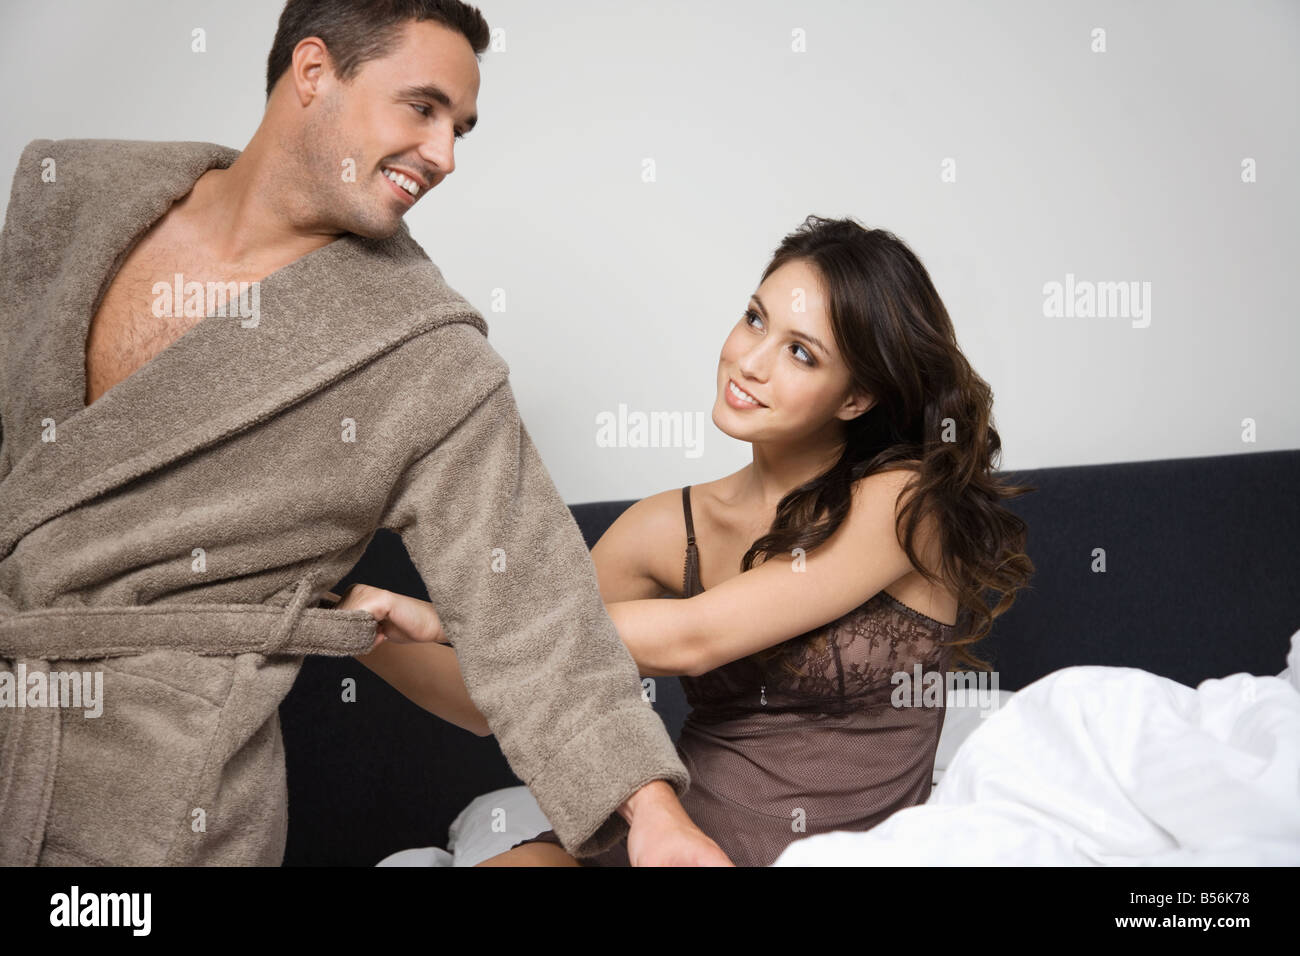 A woman pulling at a mans bathrobe Stock Photo